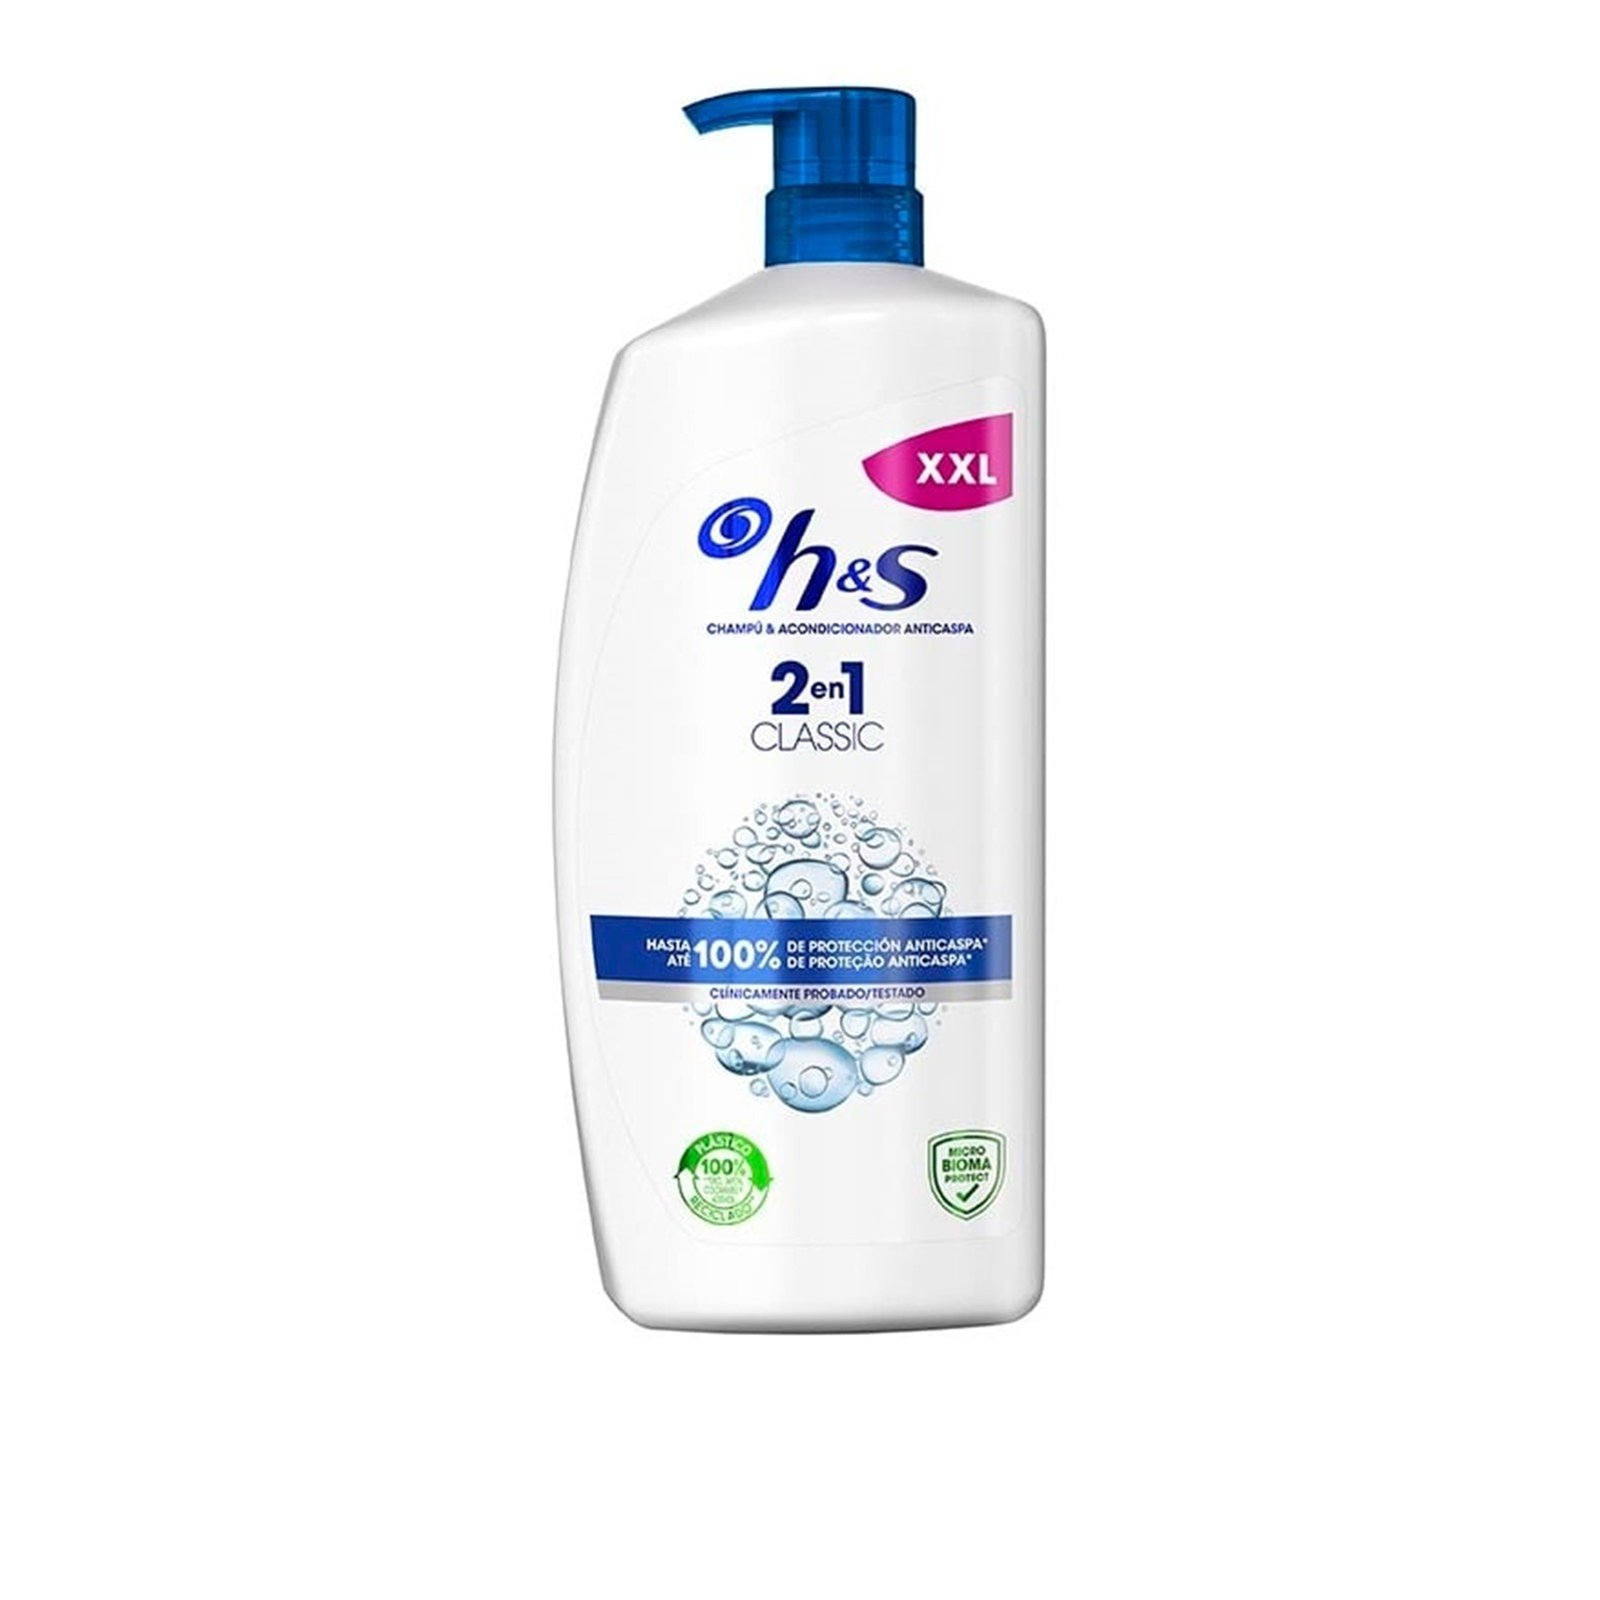 H&S Menthol Fresh Shampoo 340ml (11.50fl oz)